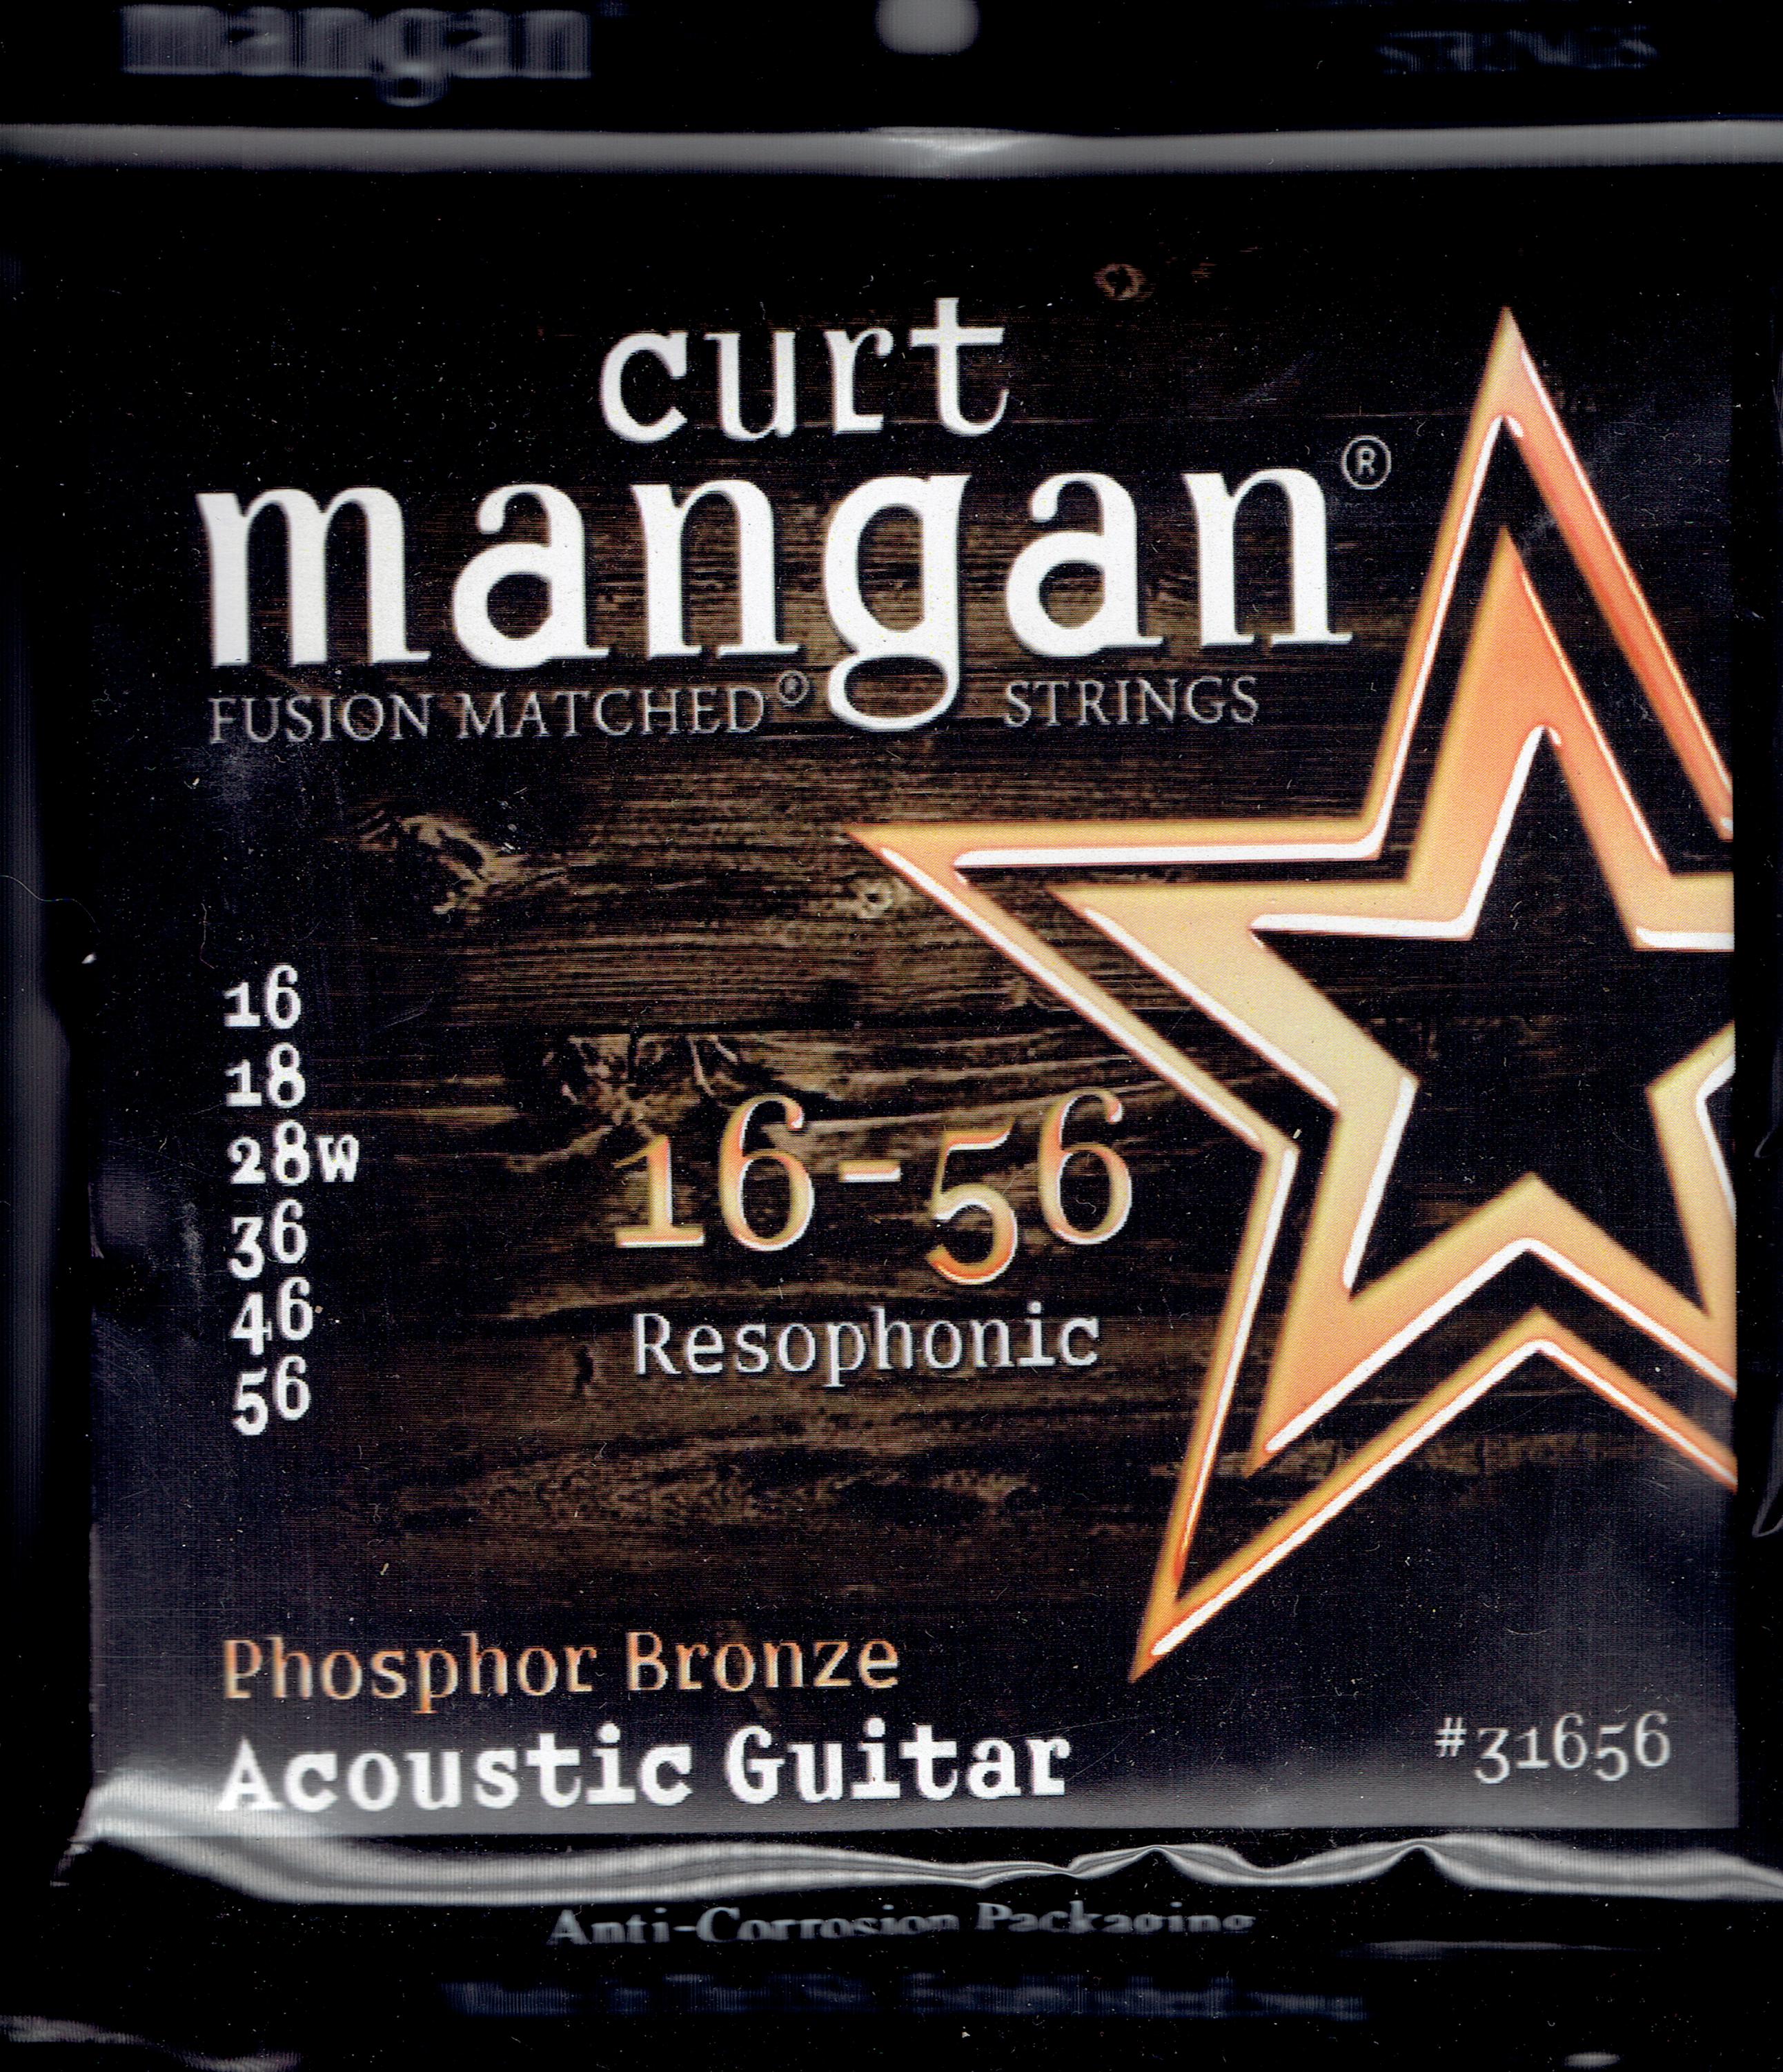 Curt Mangan resophonic 16-56 phosphor bronze strings